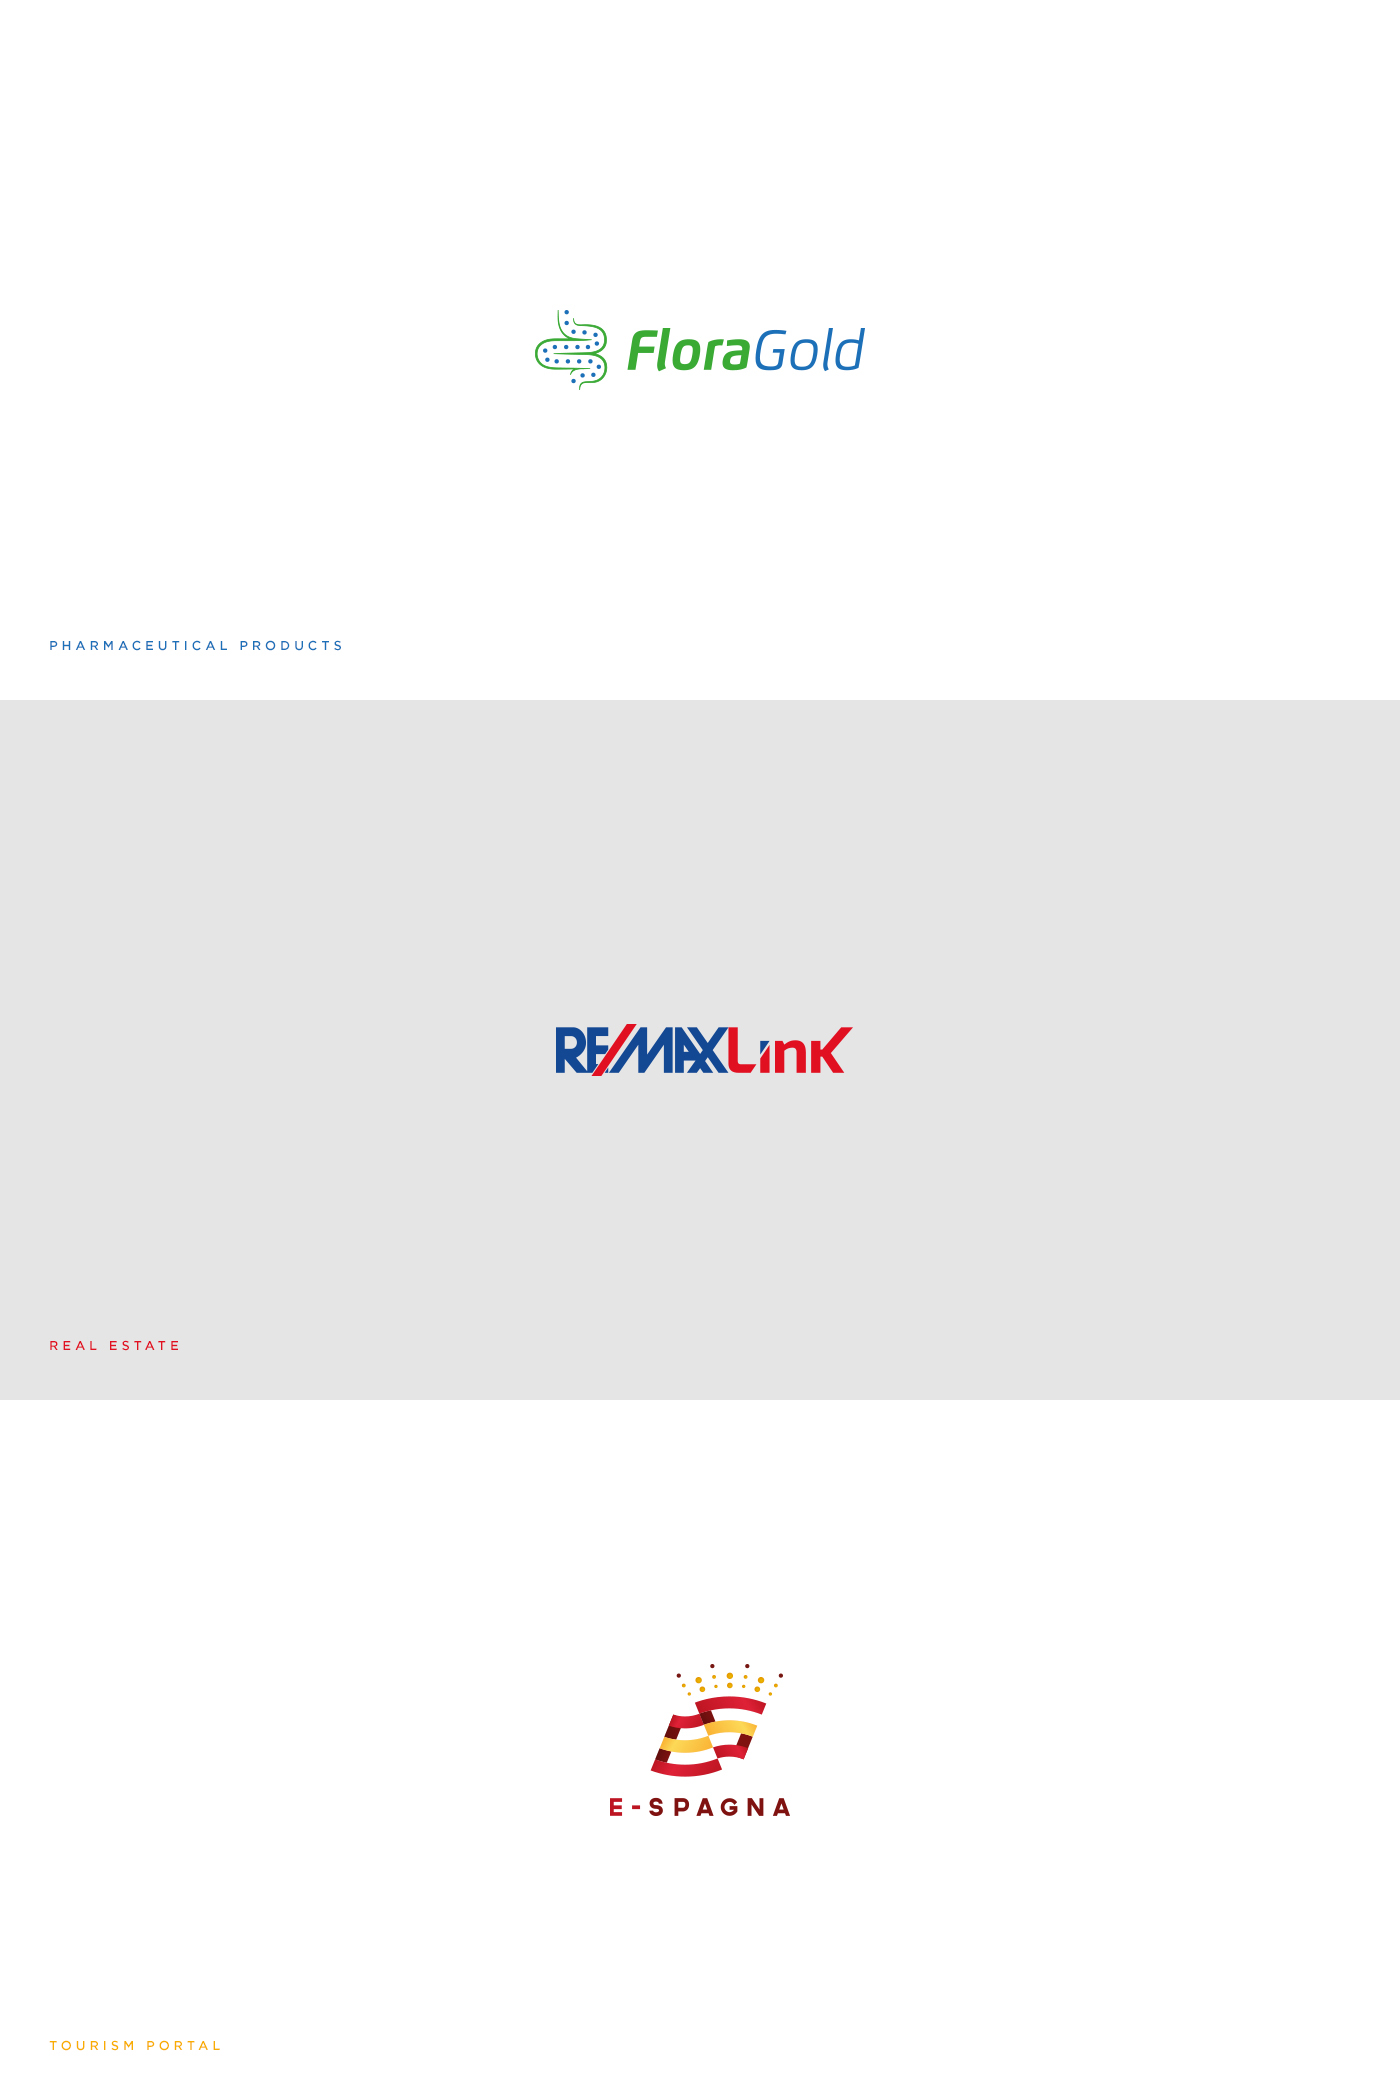 logofolio logo logo collection logos marks Logotype lettering brand identity symbol simple colors Icon brand design logo challenge